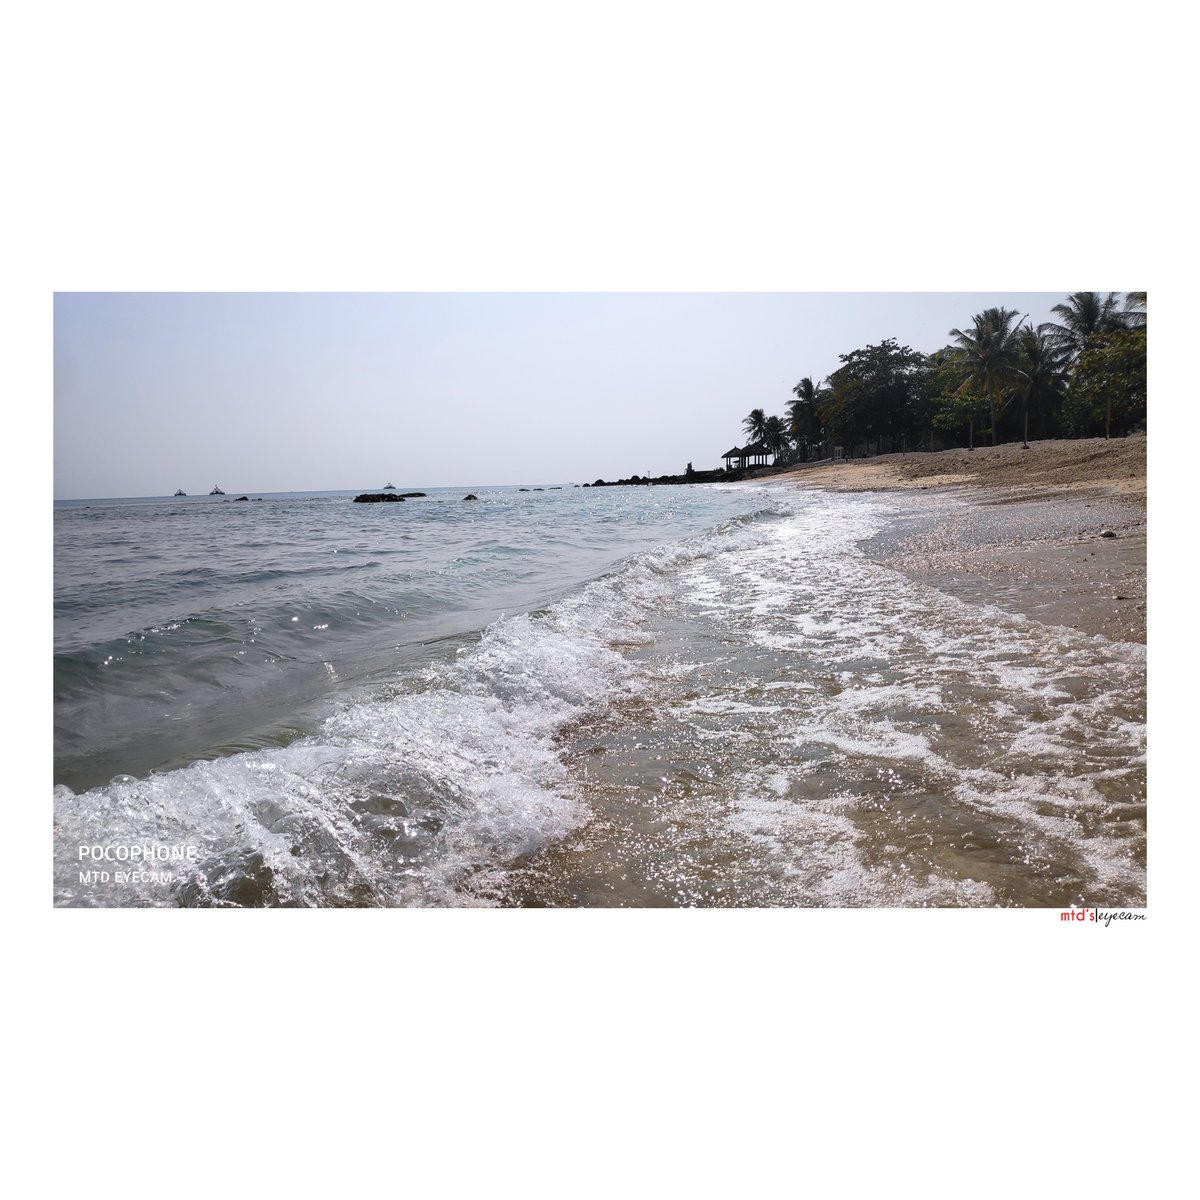 Pantai Tanjung Lesung.
for more pict instagram.com/mtd.eyecam
#shotbyphone #pocophonef1